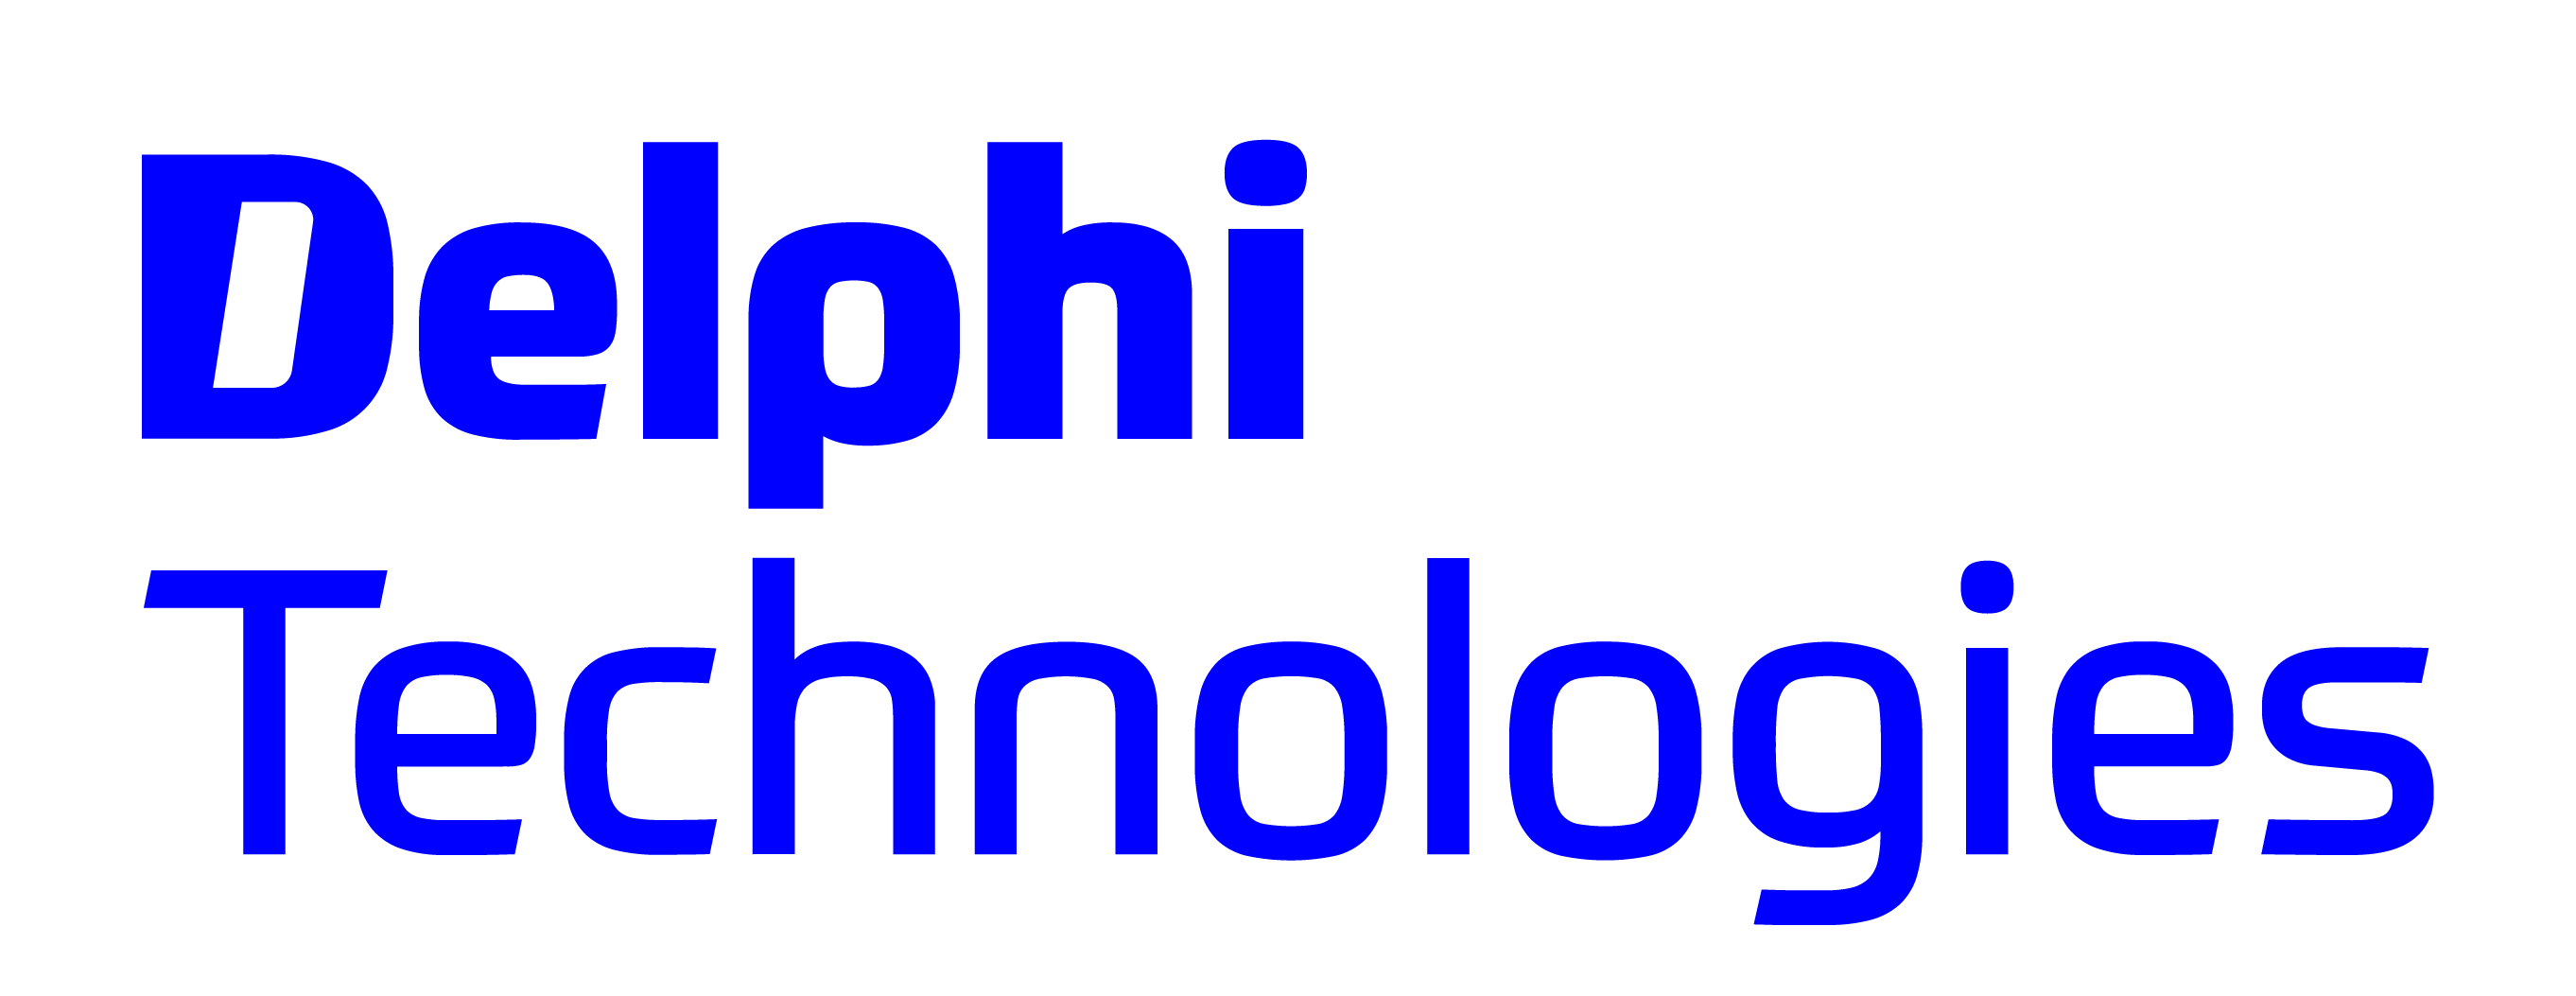 German Auto Parts Logo - AAPEX 2018 | Delphi Auto Parts